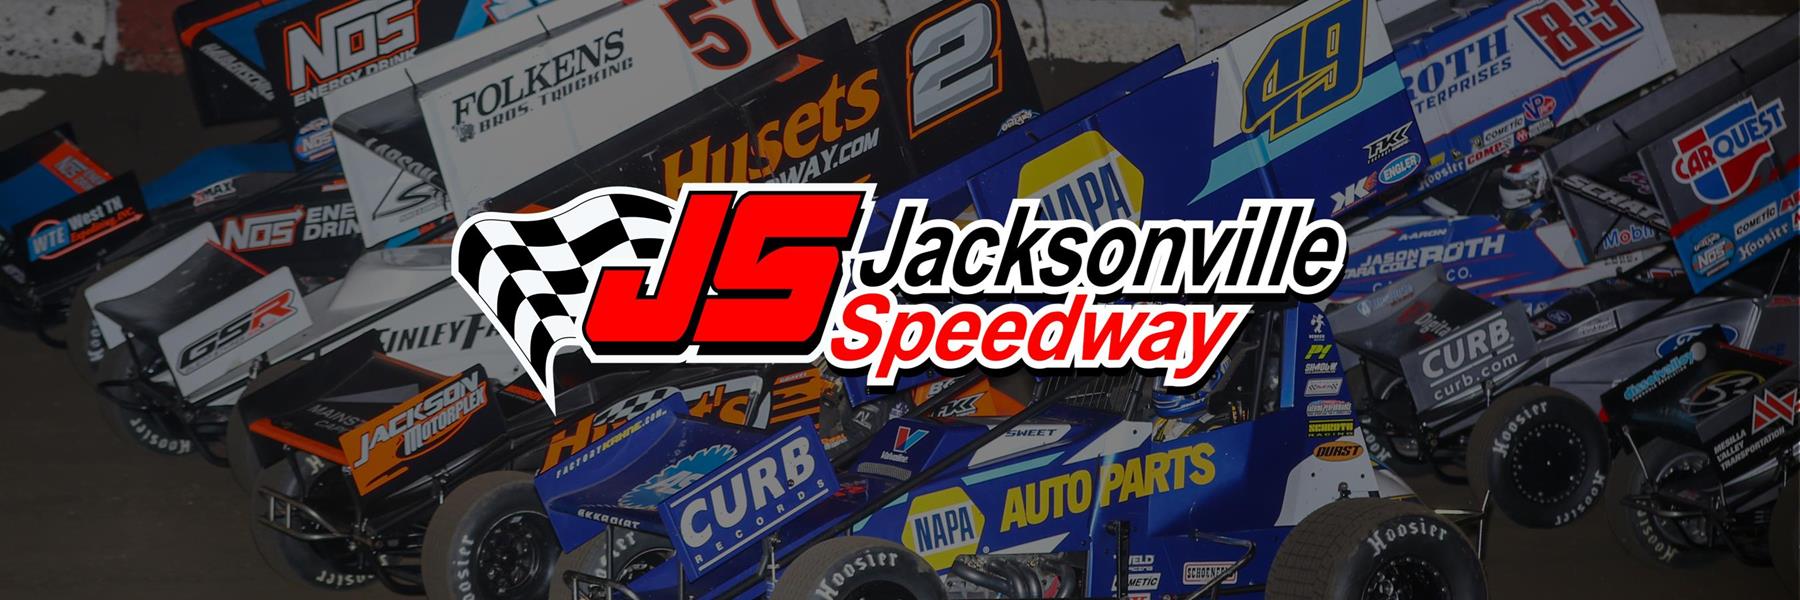 10/5/2018 - Jacksonville Speedway